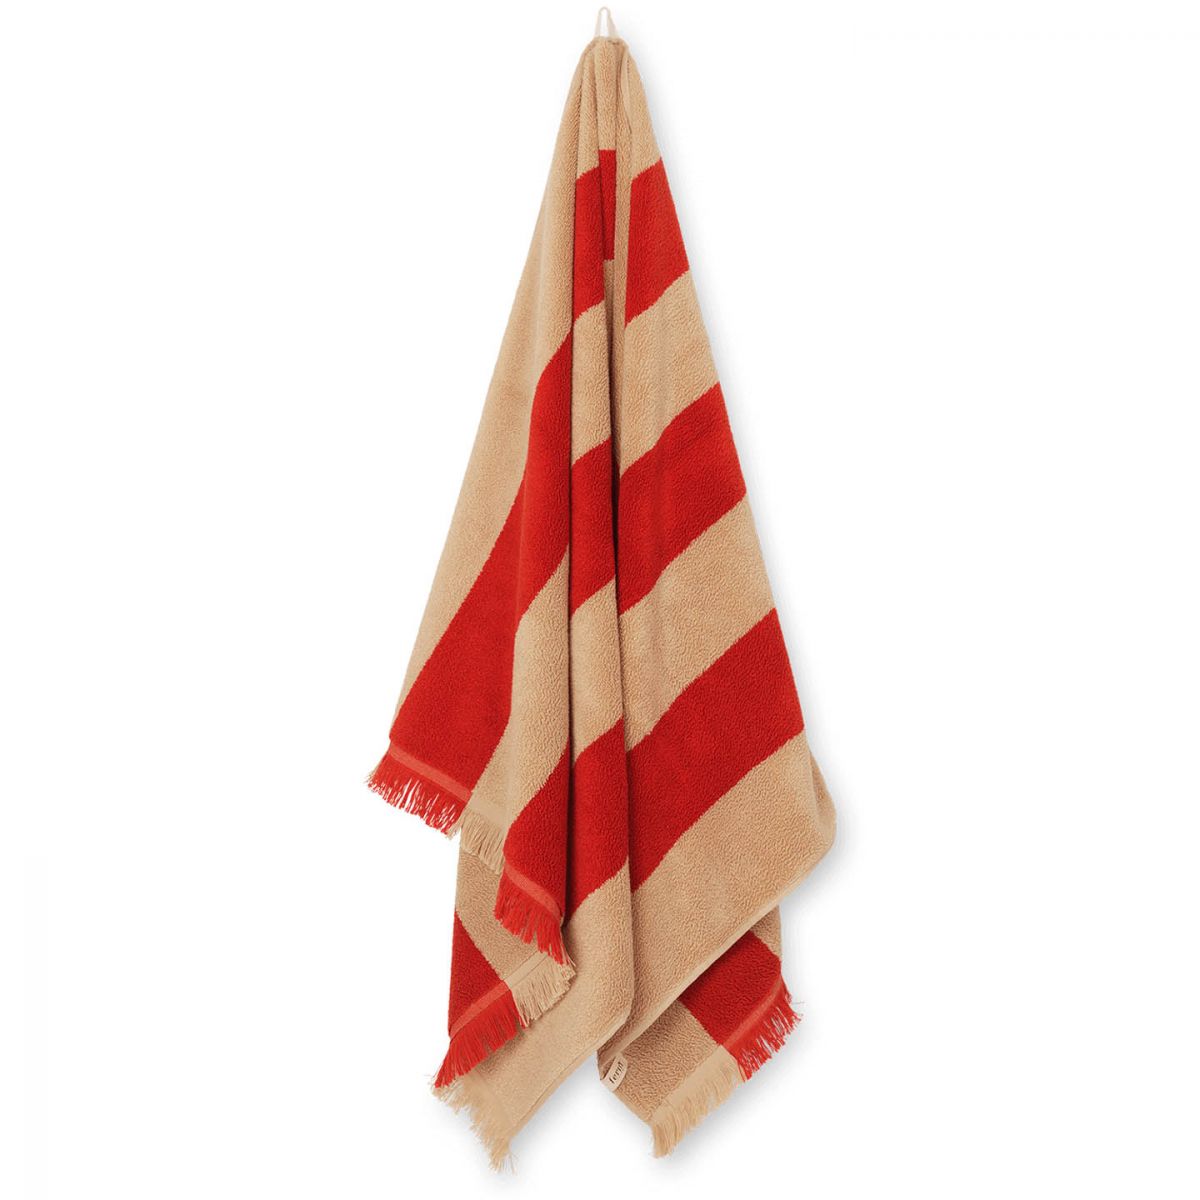 Alee Bath Towel - Light Camel/Red